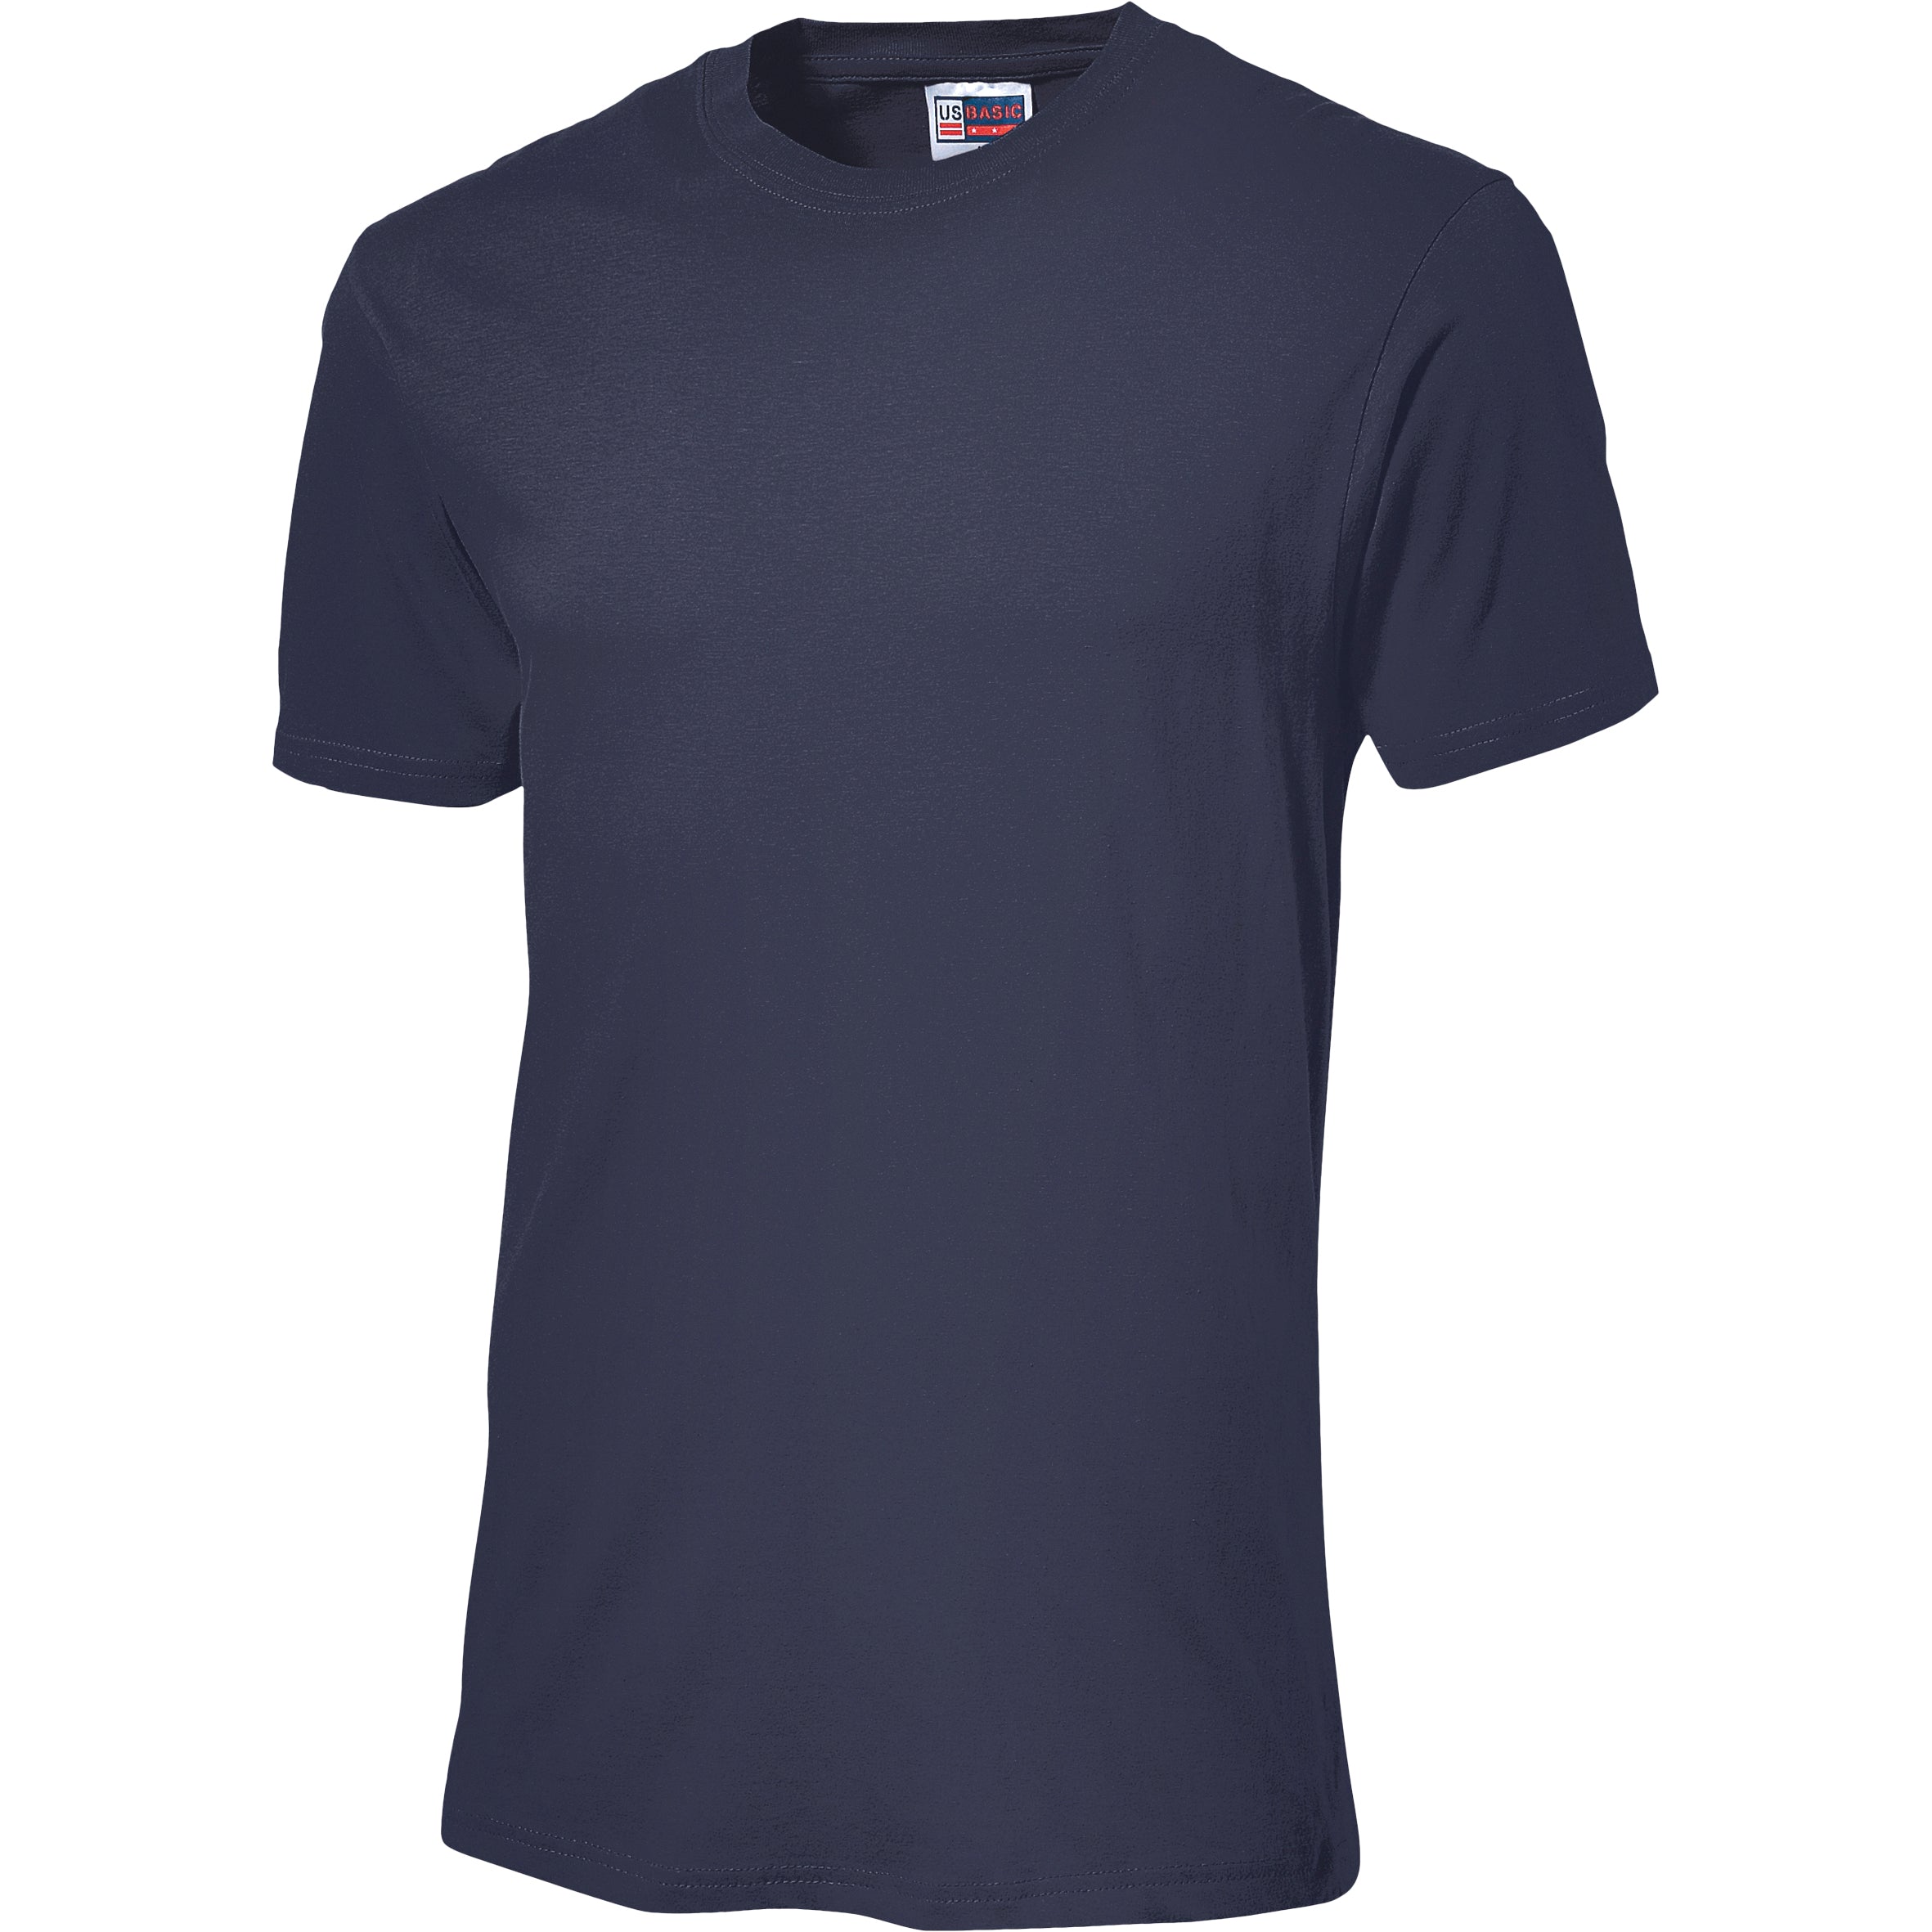 Unisex Super Club 135 T-Shirt L / Navy / N